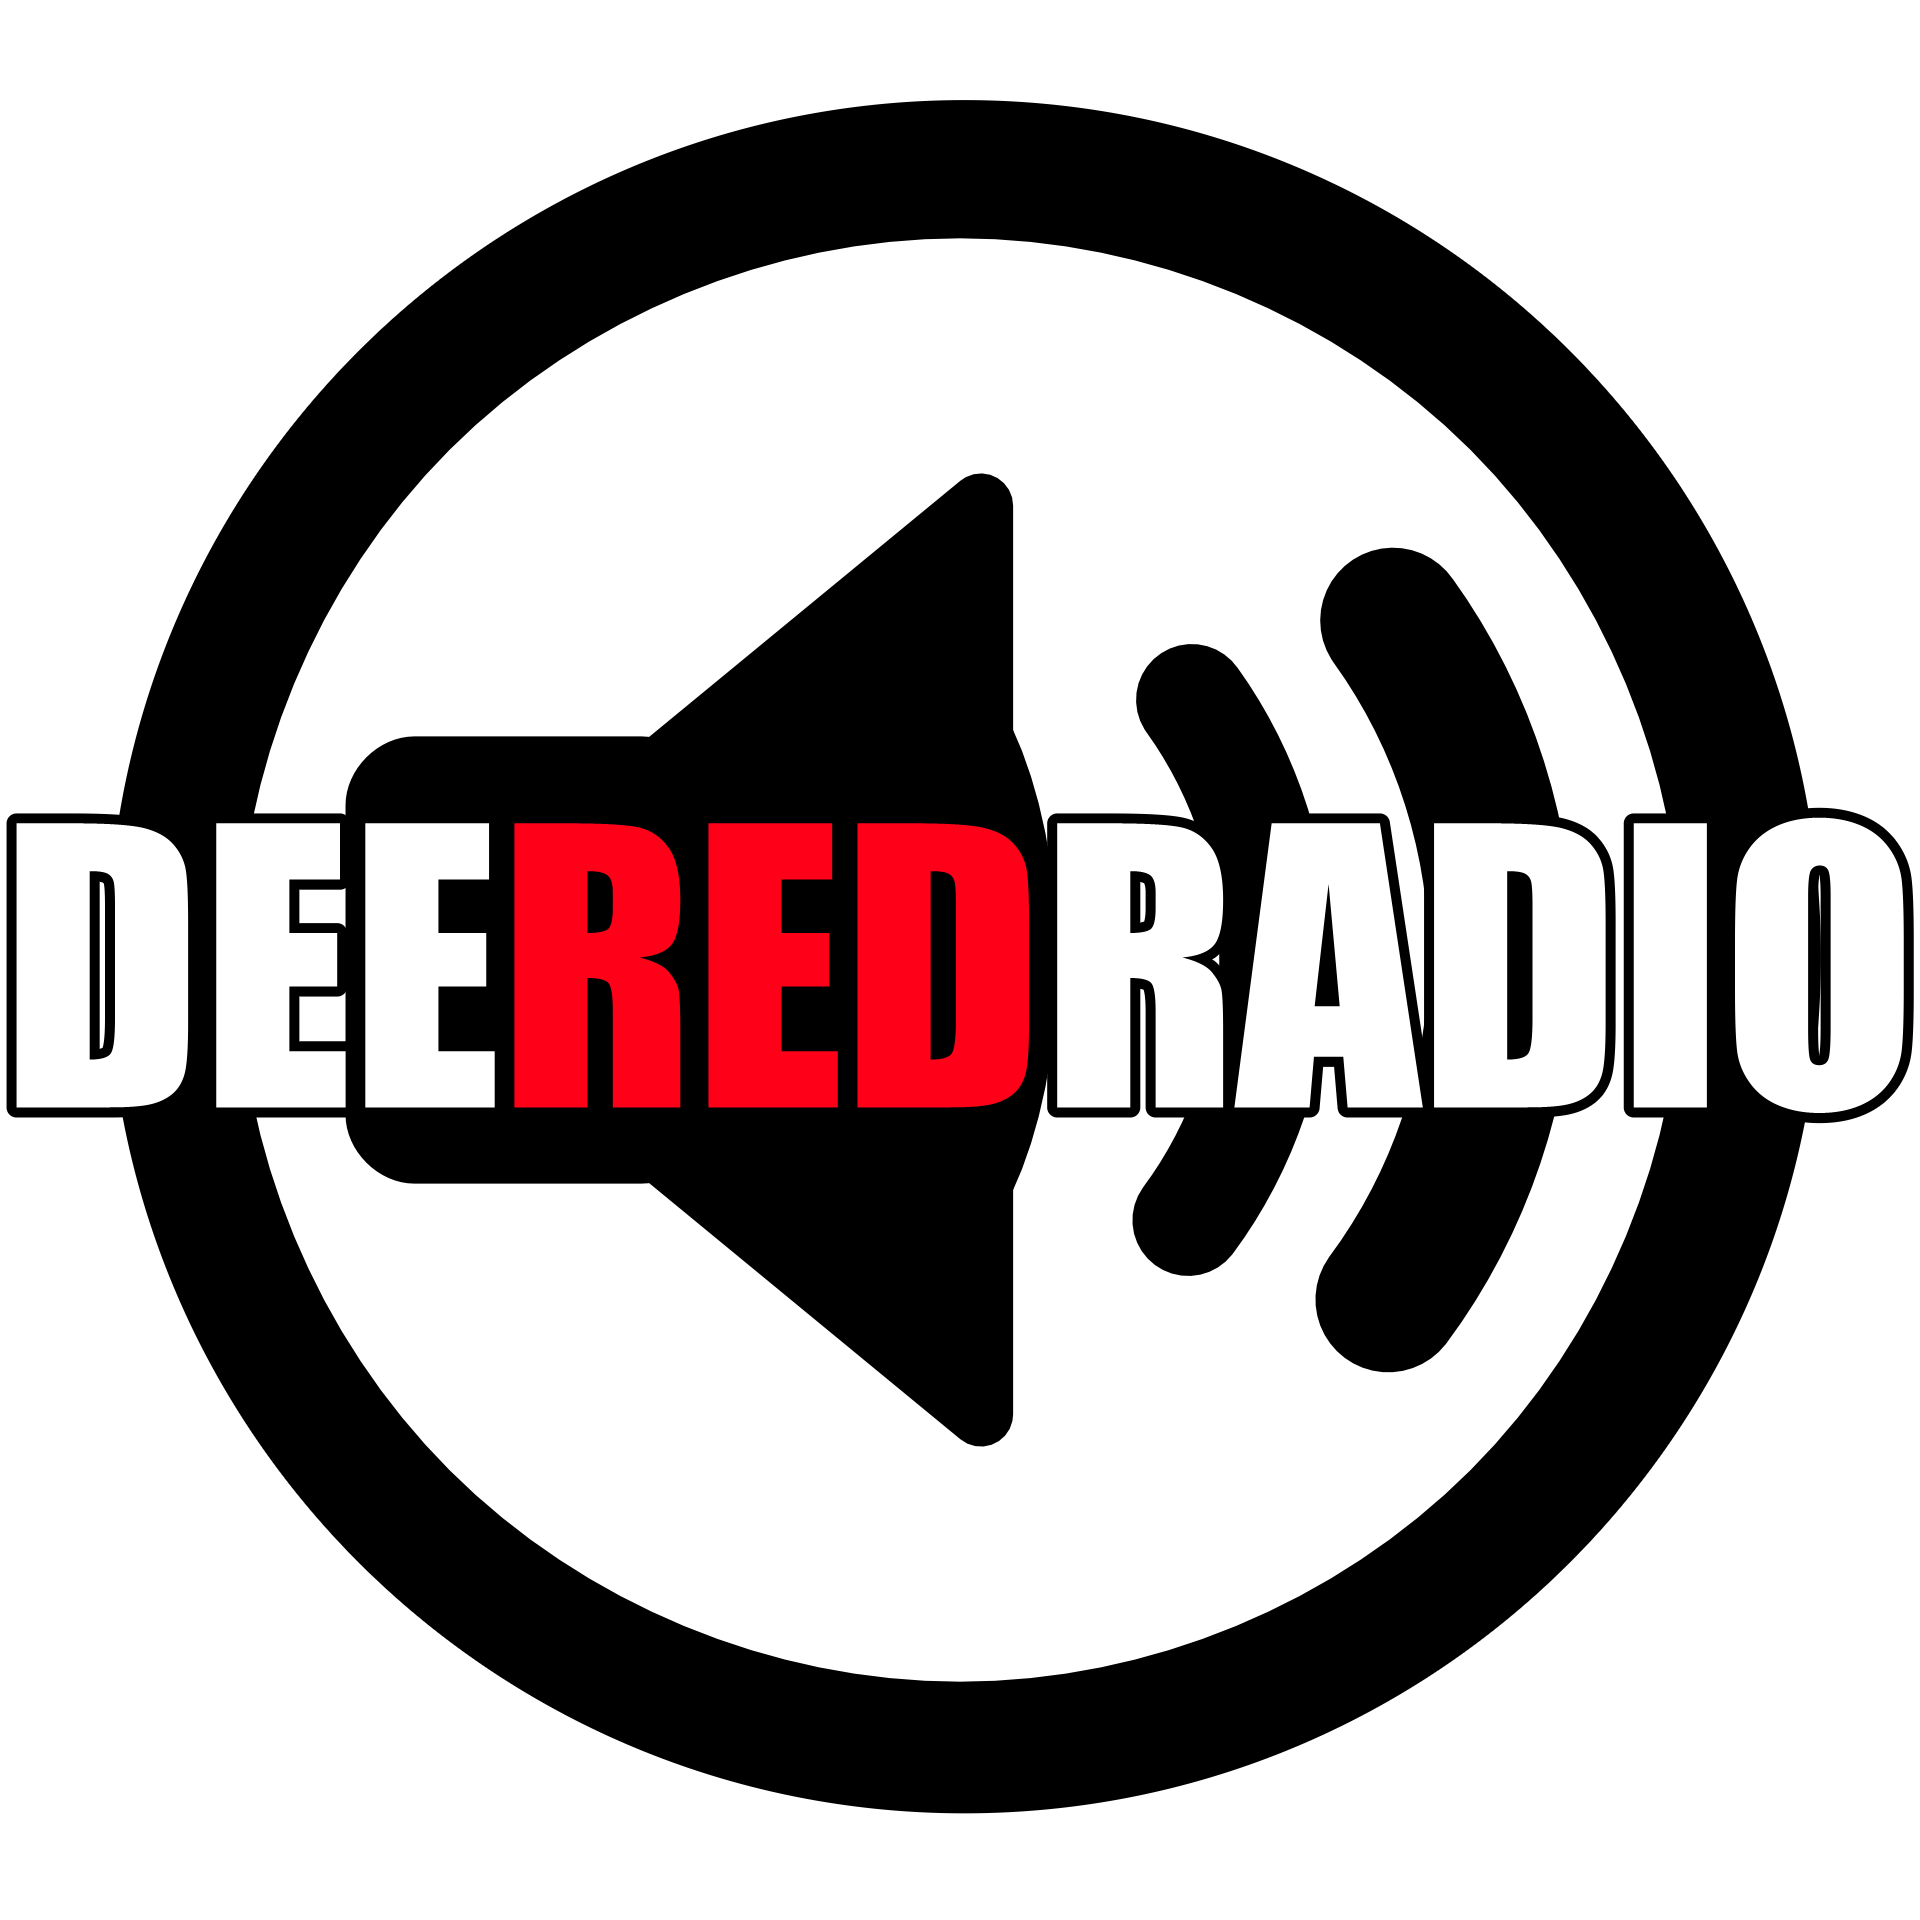 Online Radio Box | DEEREDRADIO